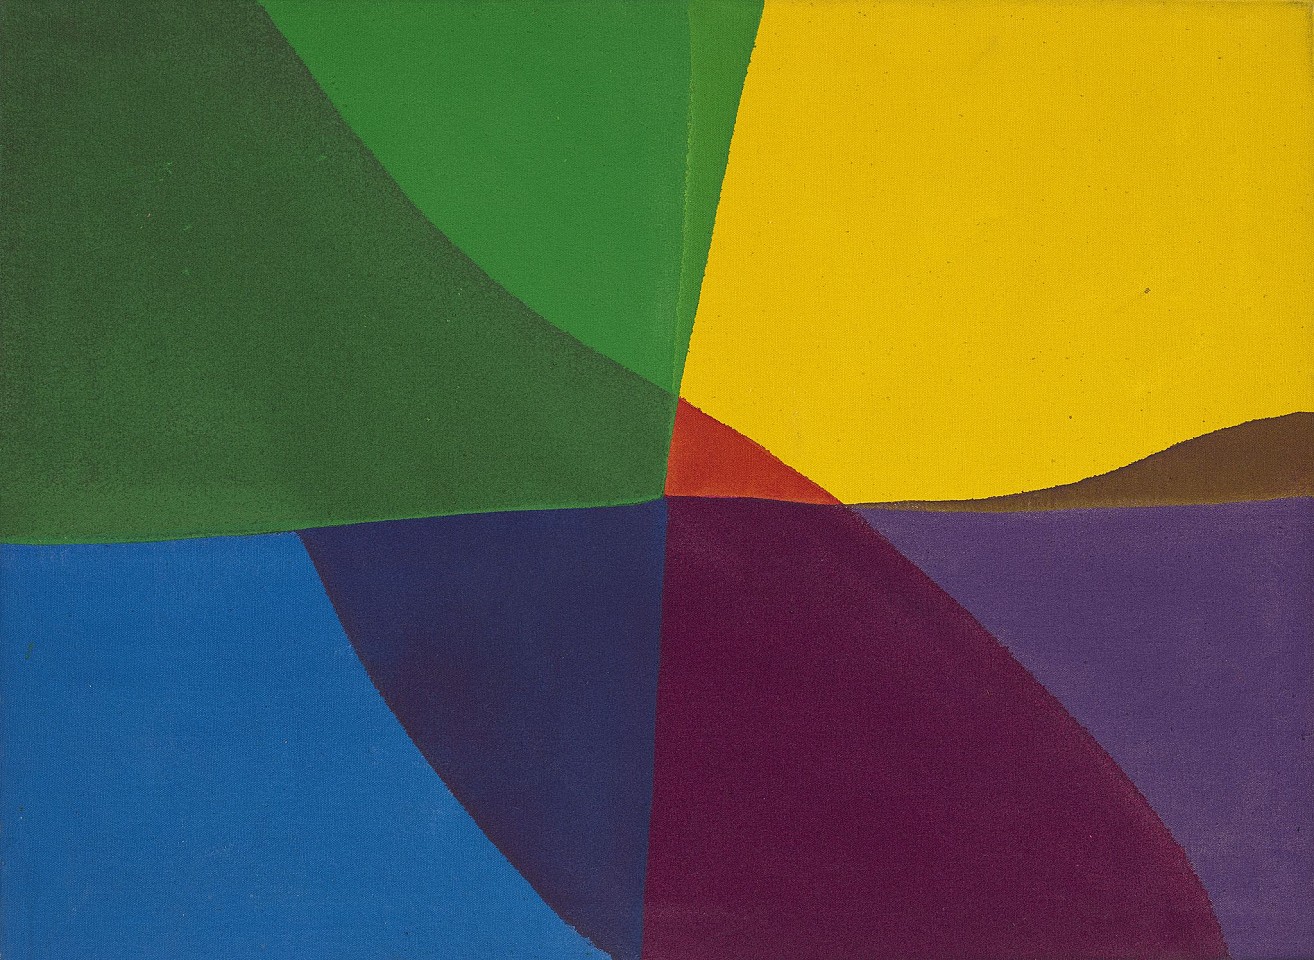 Yvonne Thomas, Untitled, 1964
Acrylic on canvas, 22 3/8 x 30 1/4 in. (56.8 x 76.8 cm)
THO-00159